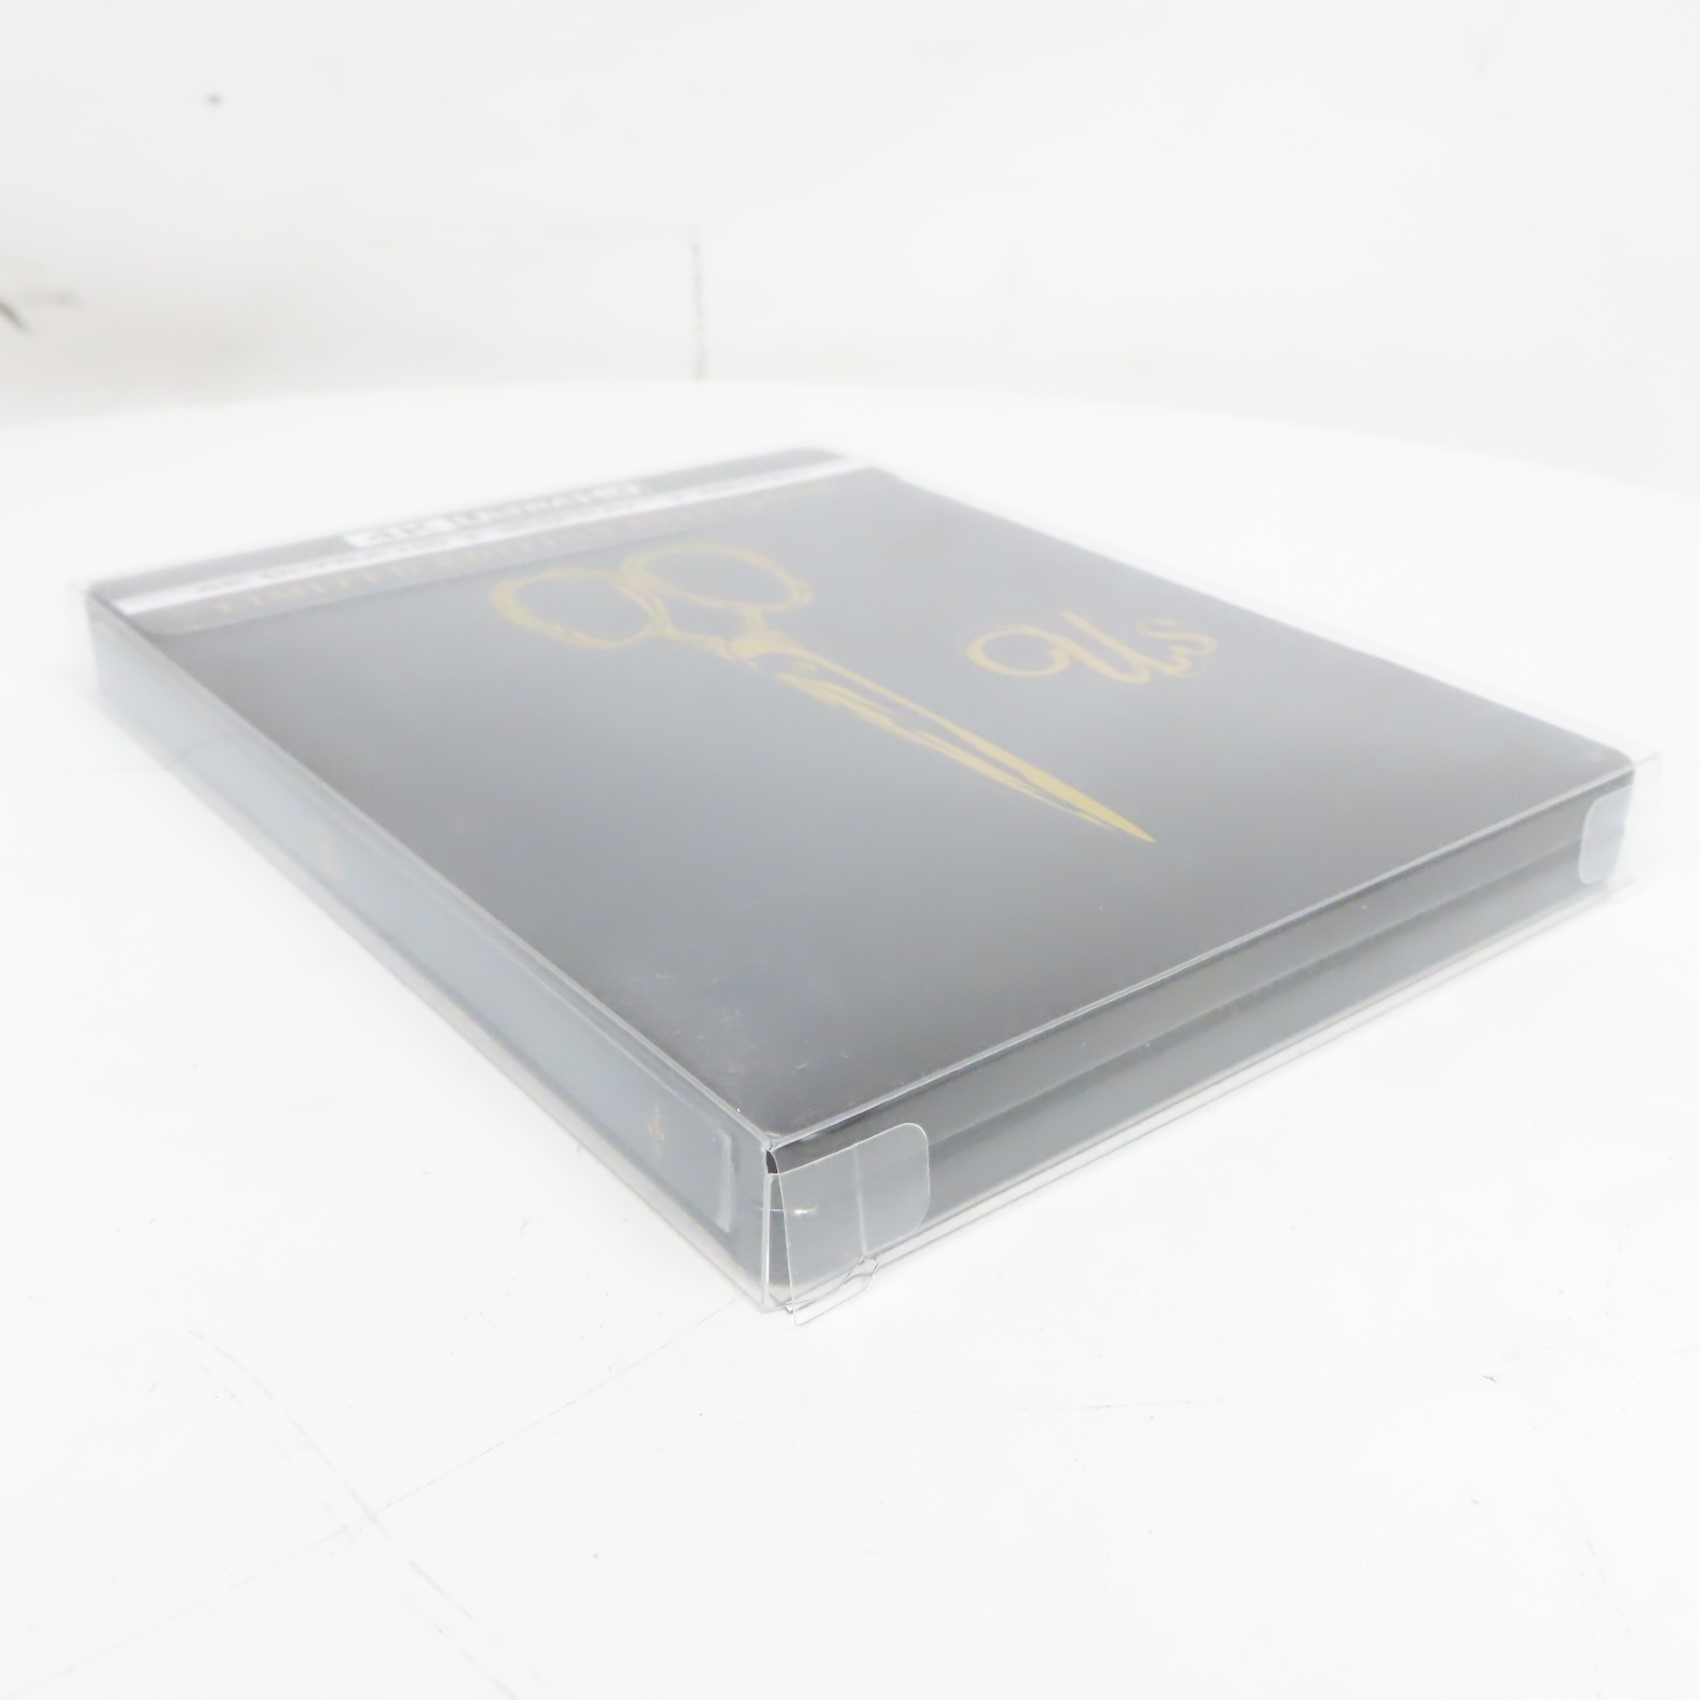 Us 4K UHD & Blu-ray 2-Disc Steelbook Limited Edition